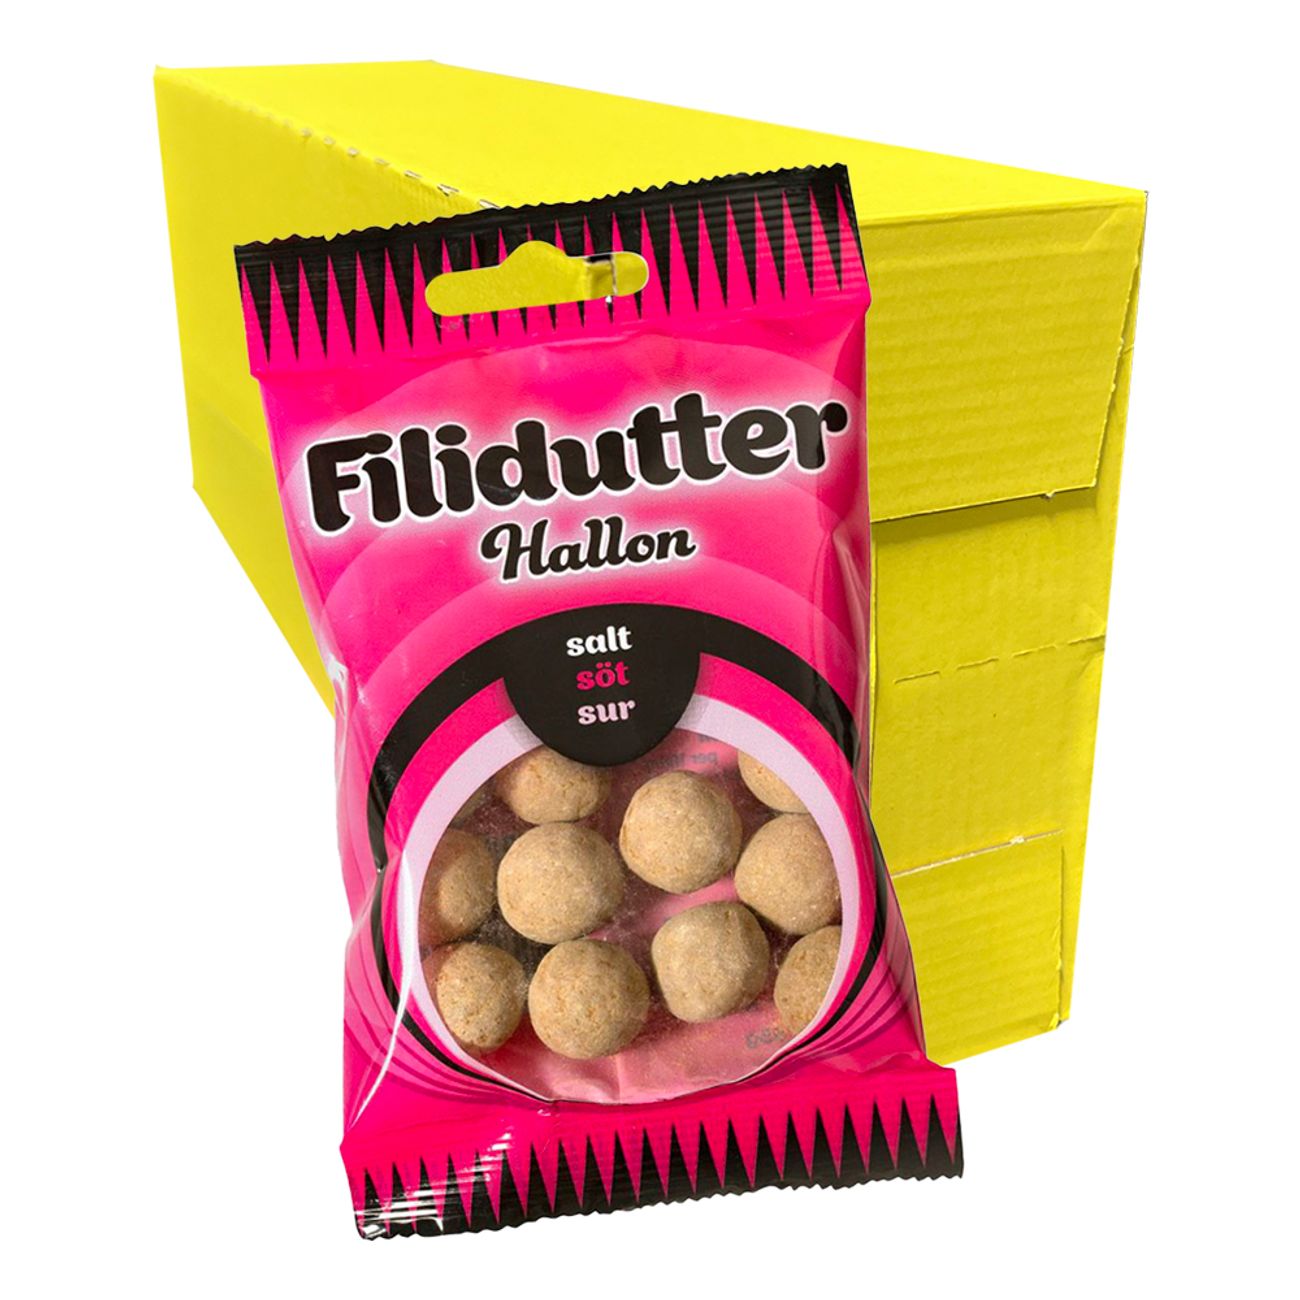 filidutter-hallon-storpack-67910-2